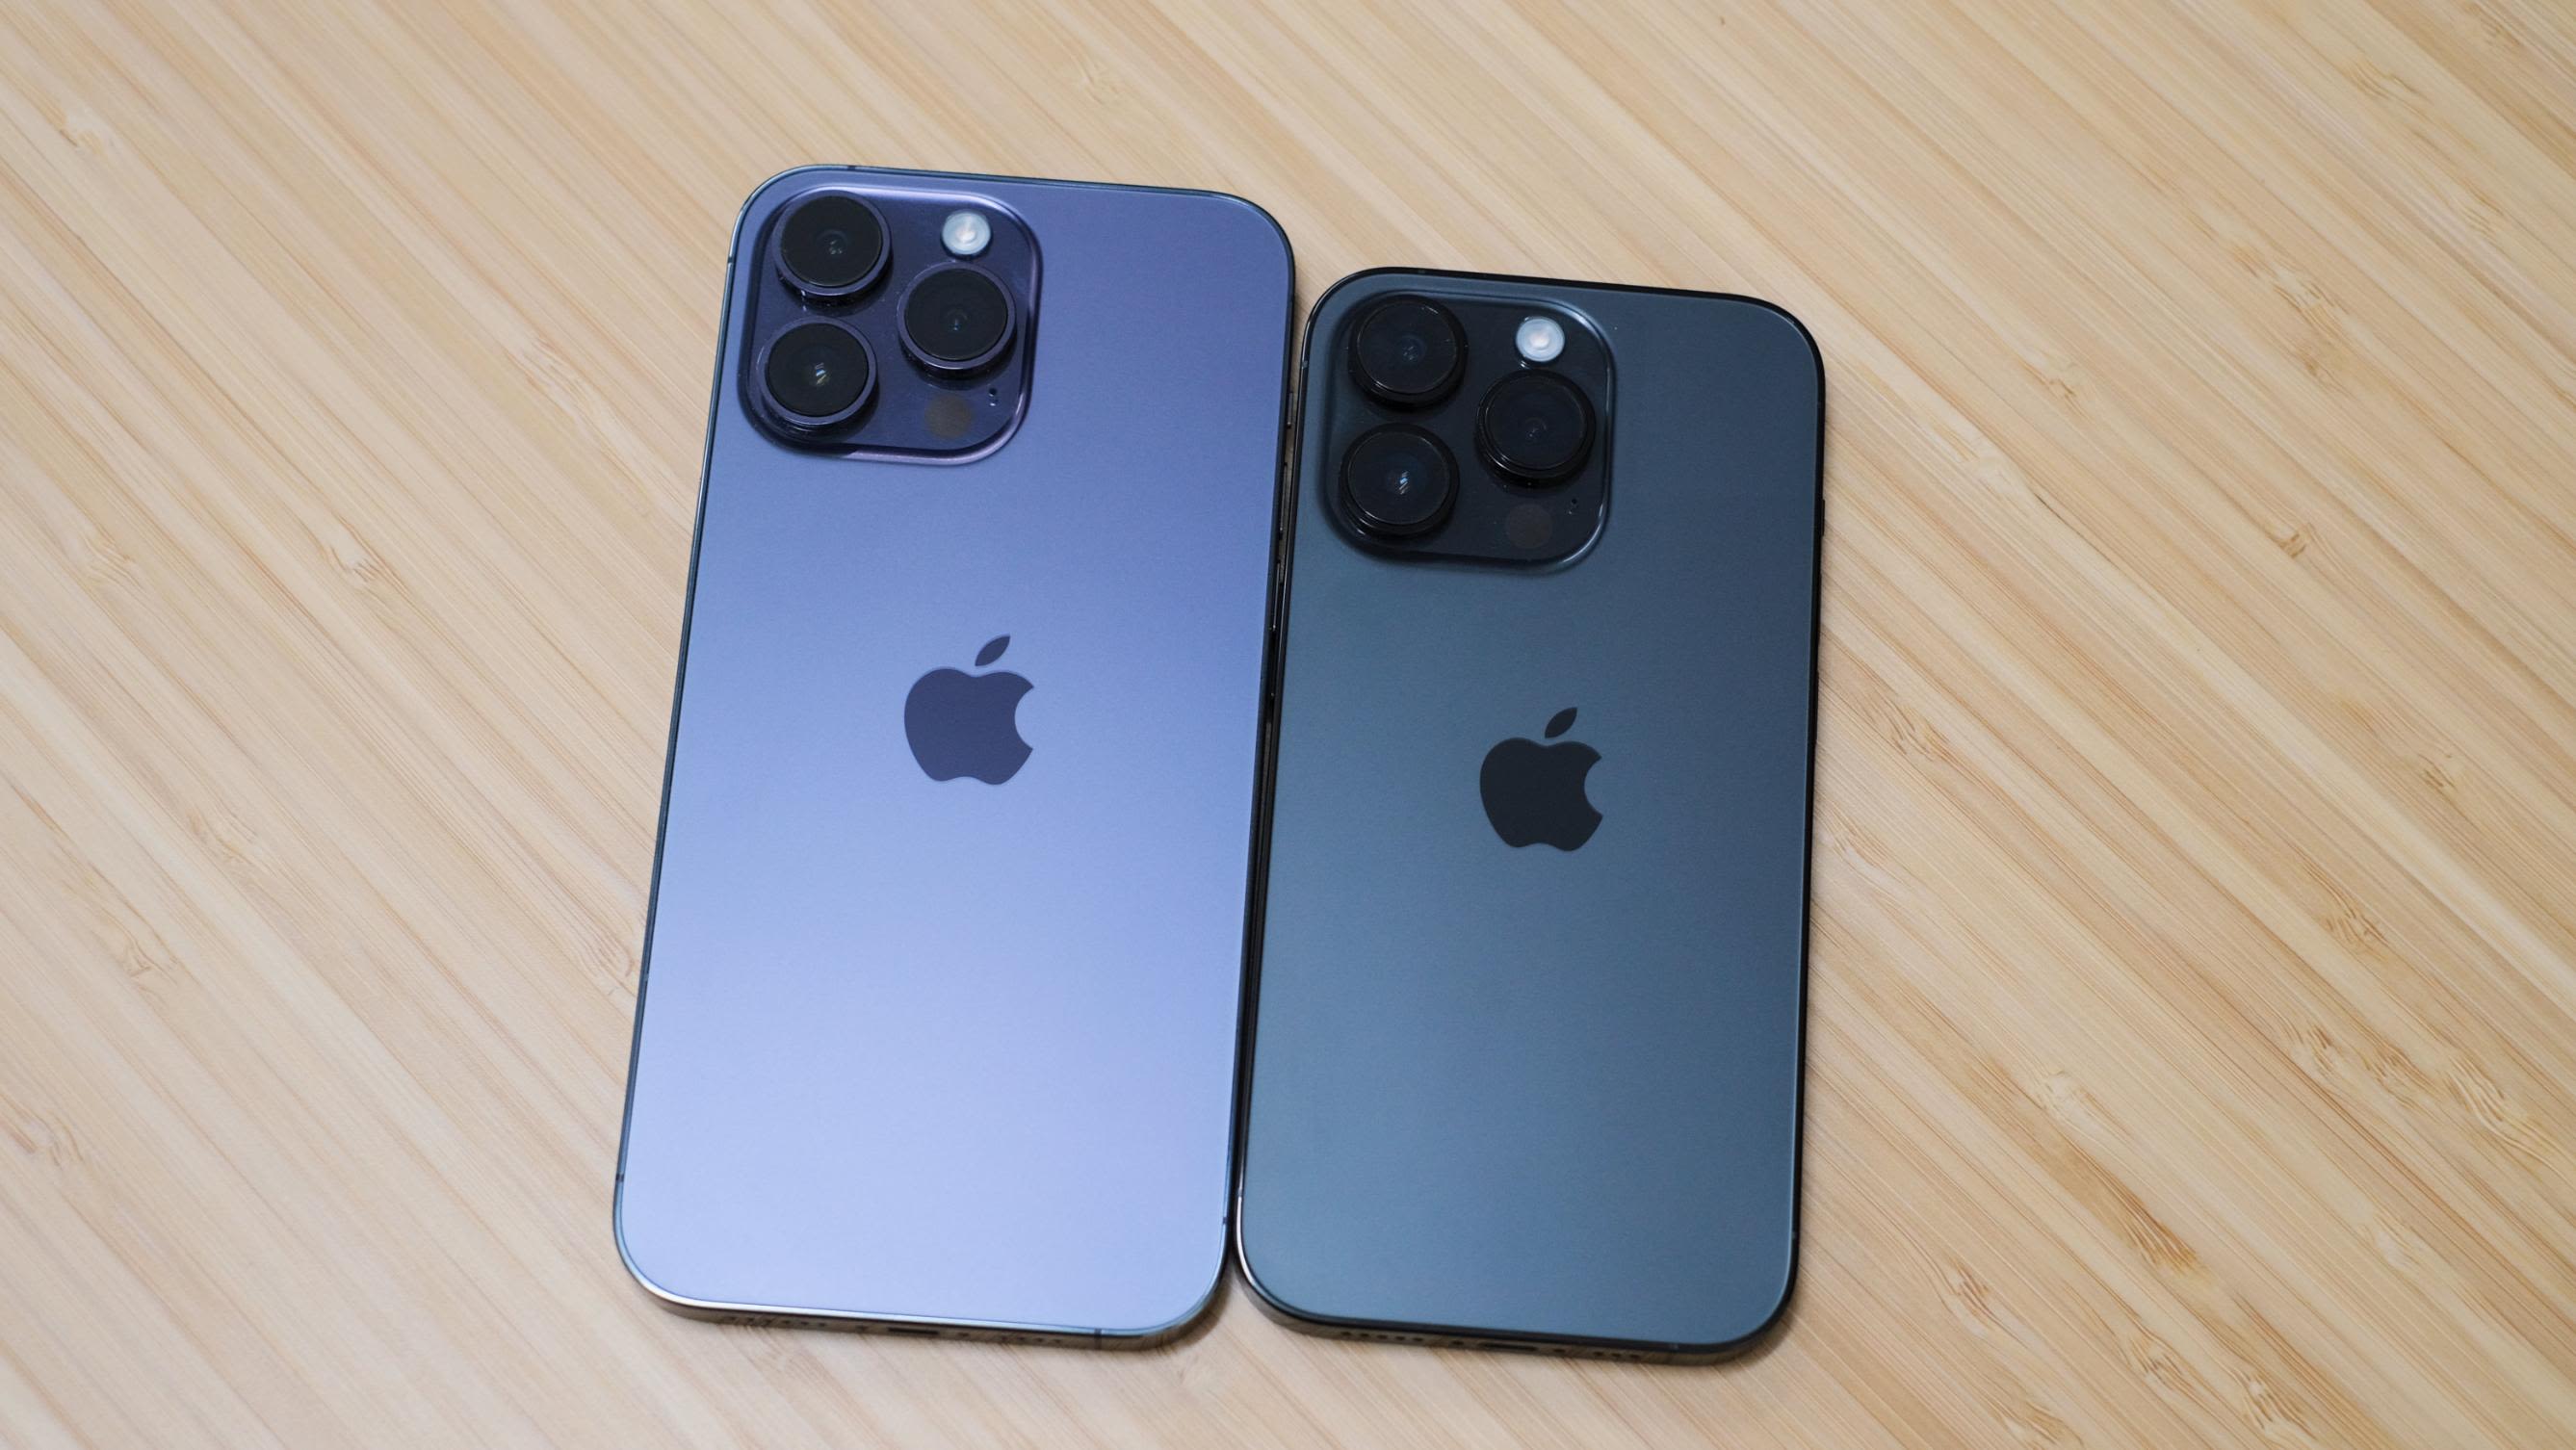 iPhone 11 Pro Max vs iPhone 14 Pro Max